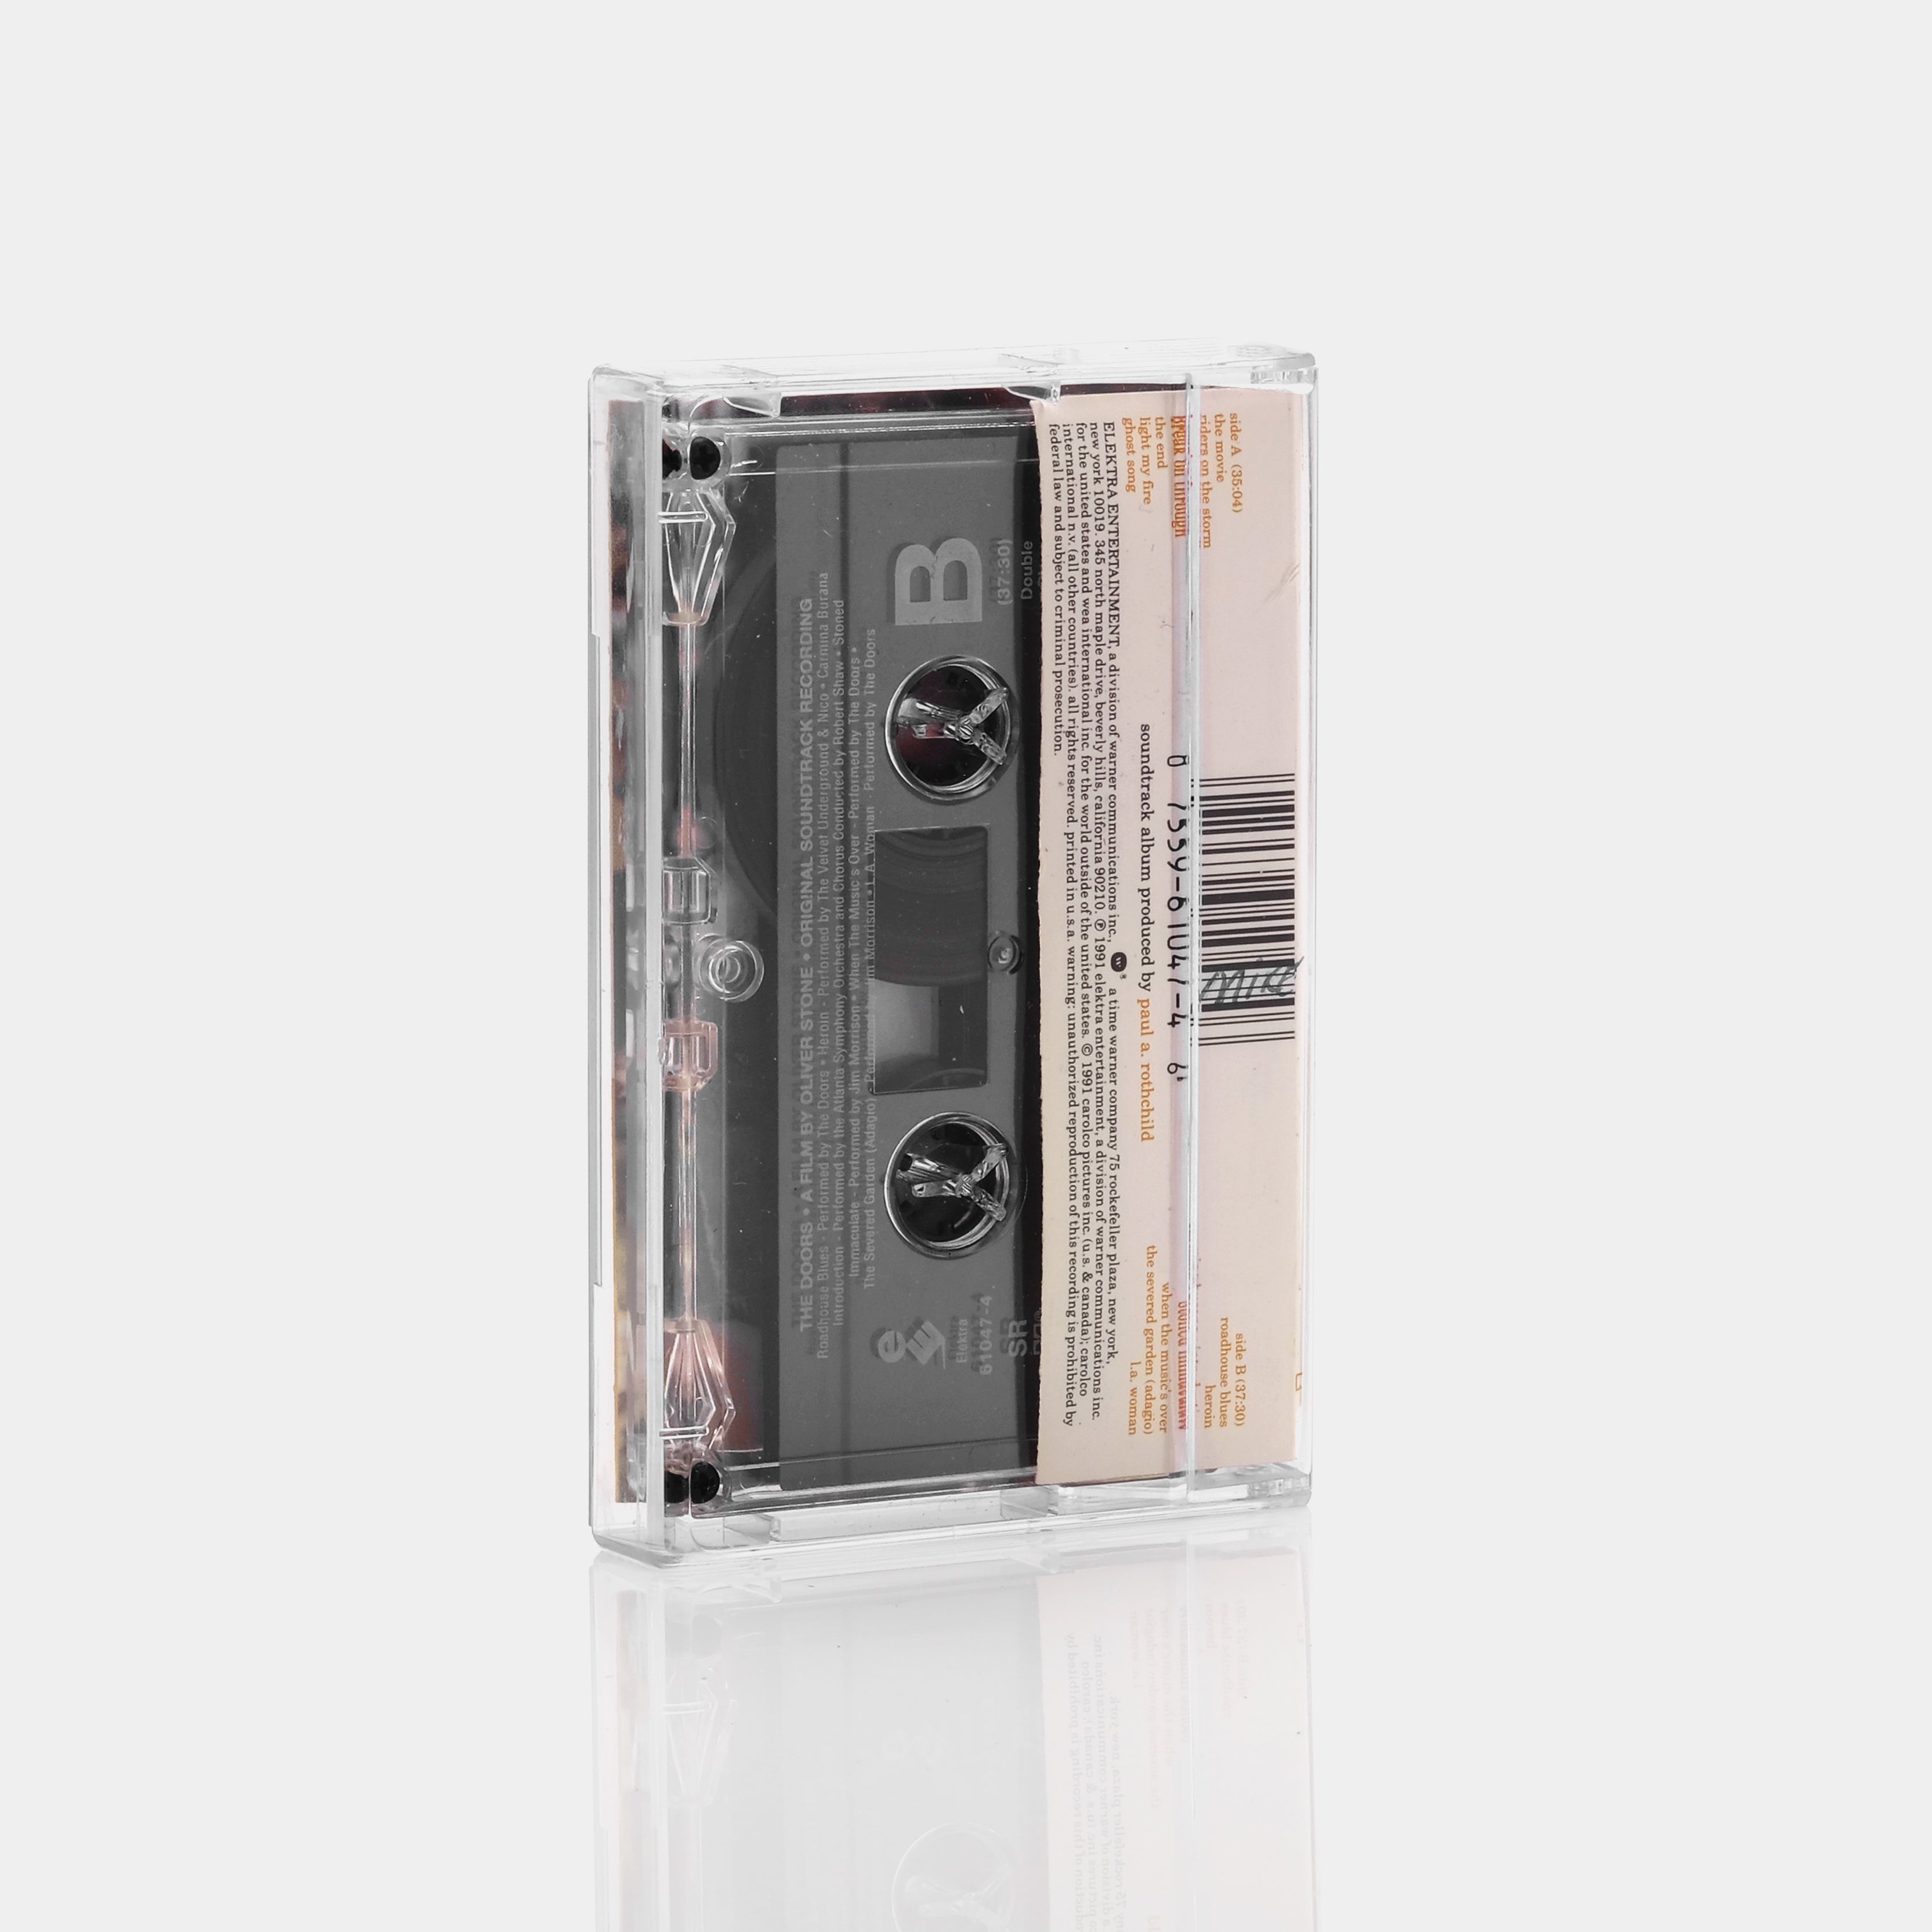 The Doors - An Oliver Stone Film Original Soundtrack Cassette Tape